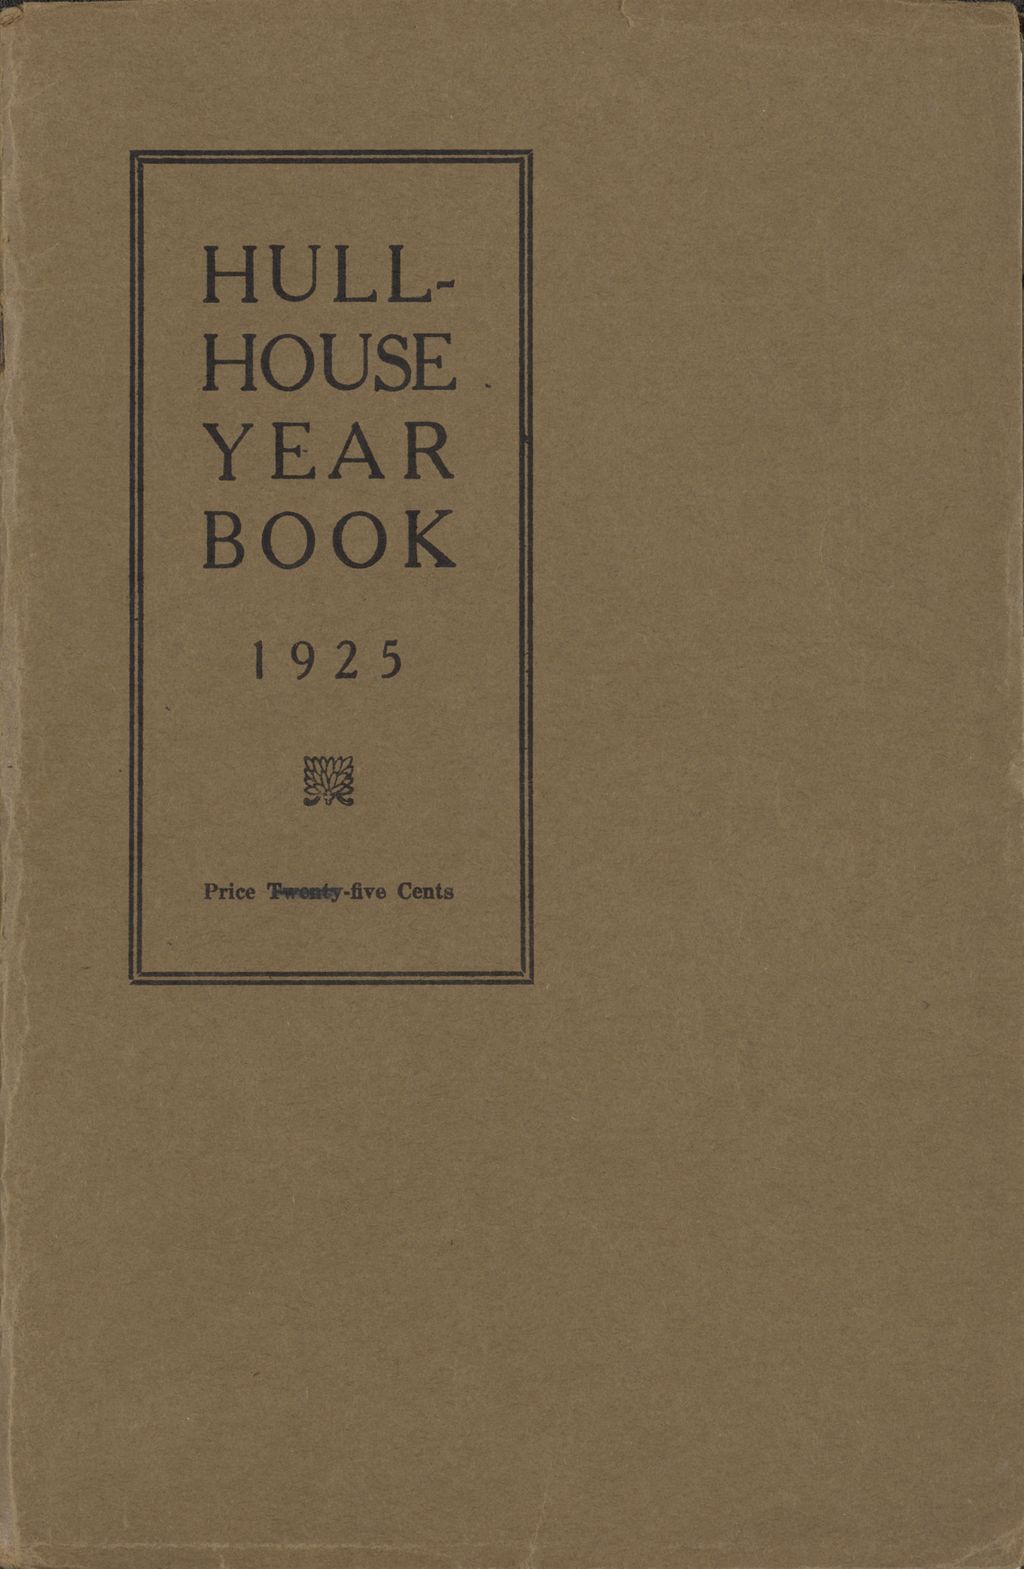 Hull-House Year Book, 1925